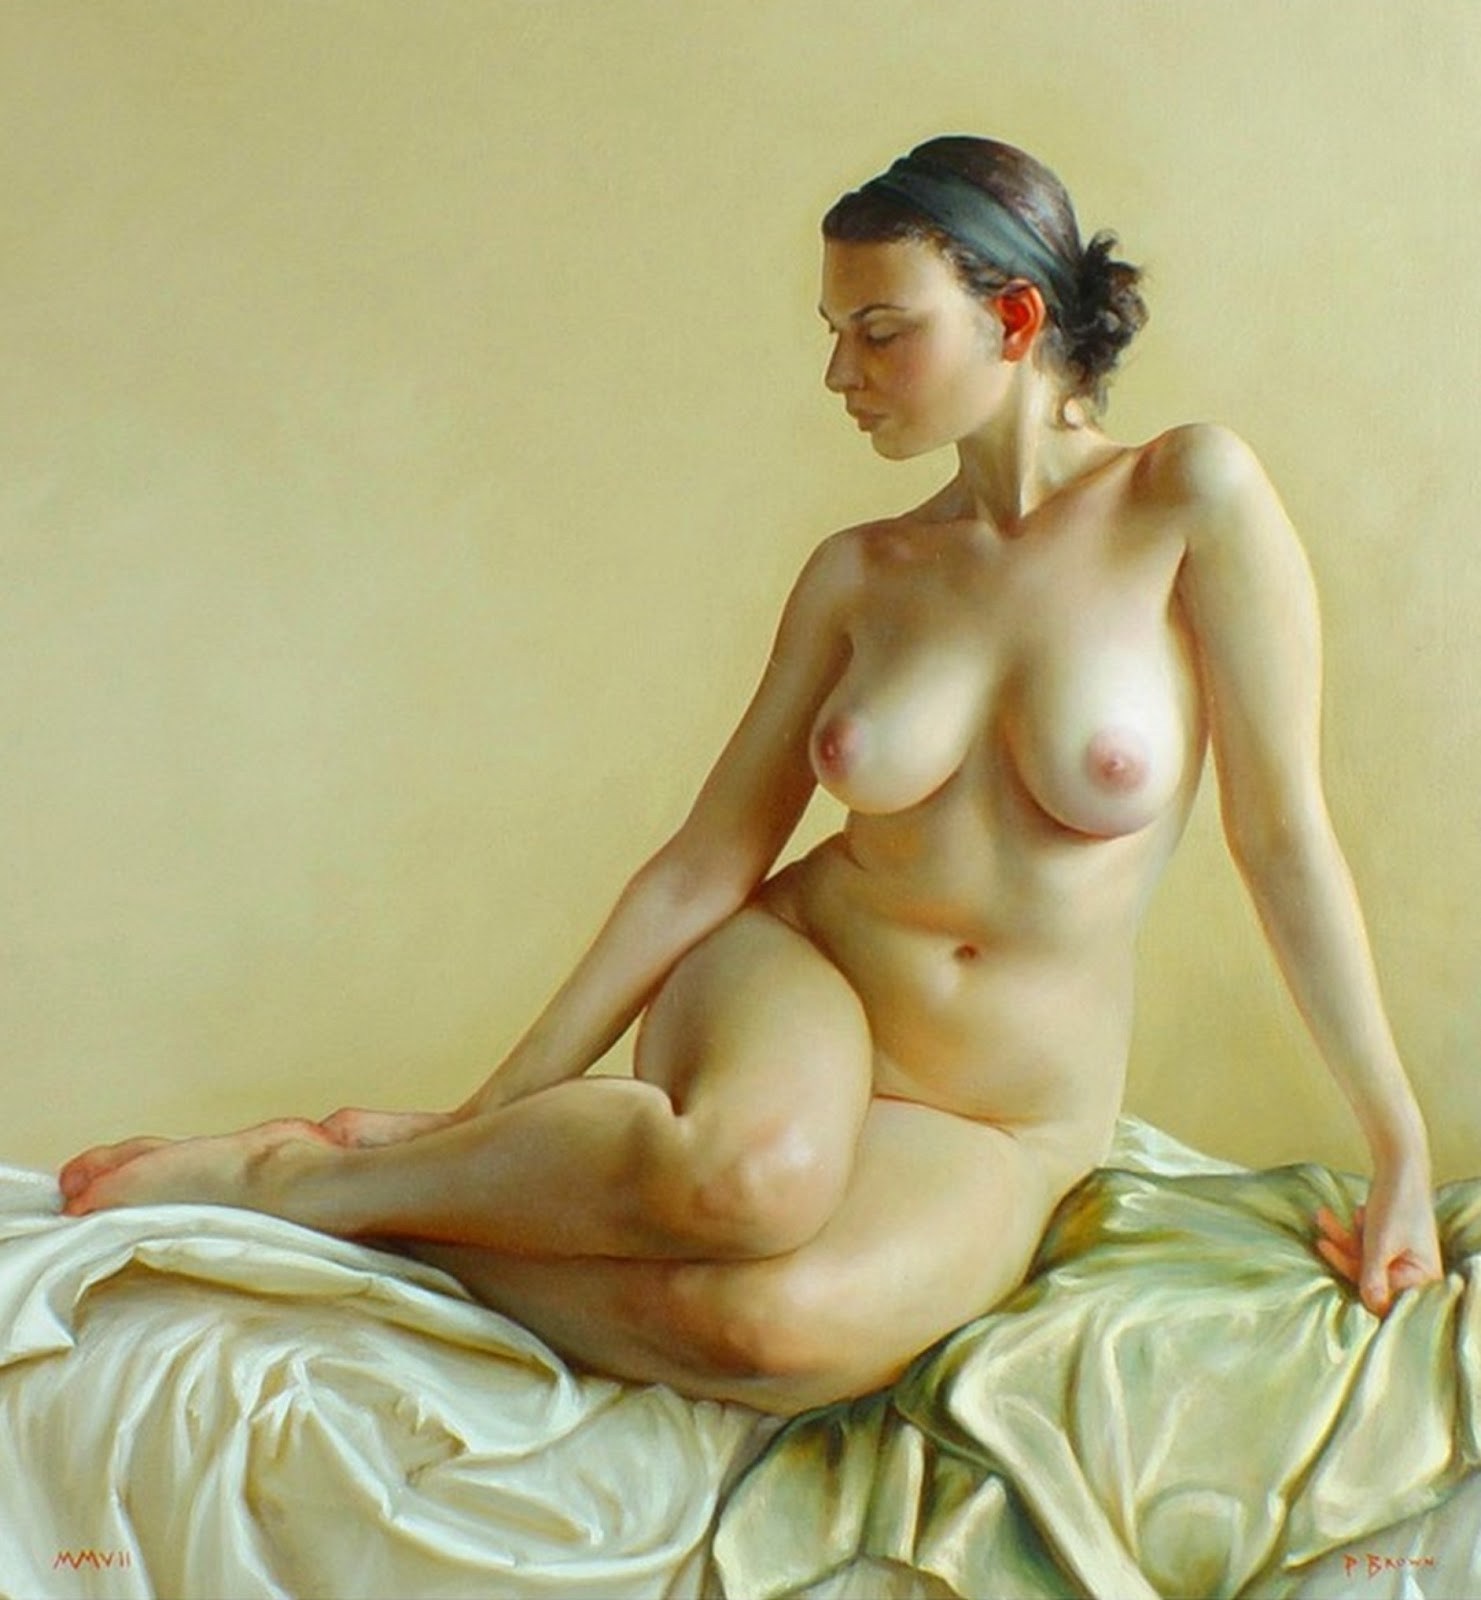 Art Nude Gallery - Nude nature erotica (63 photos) - porn photo